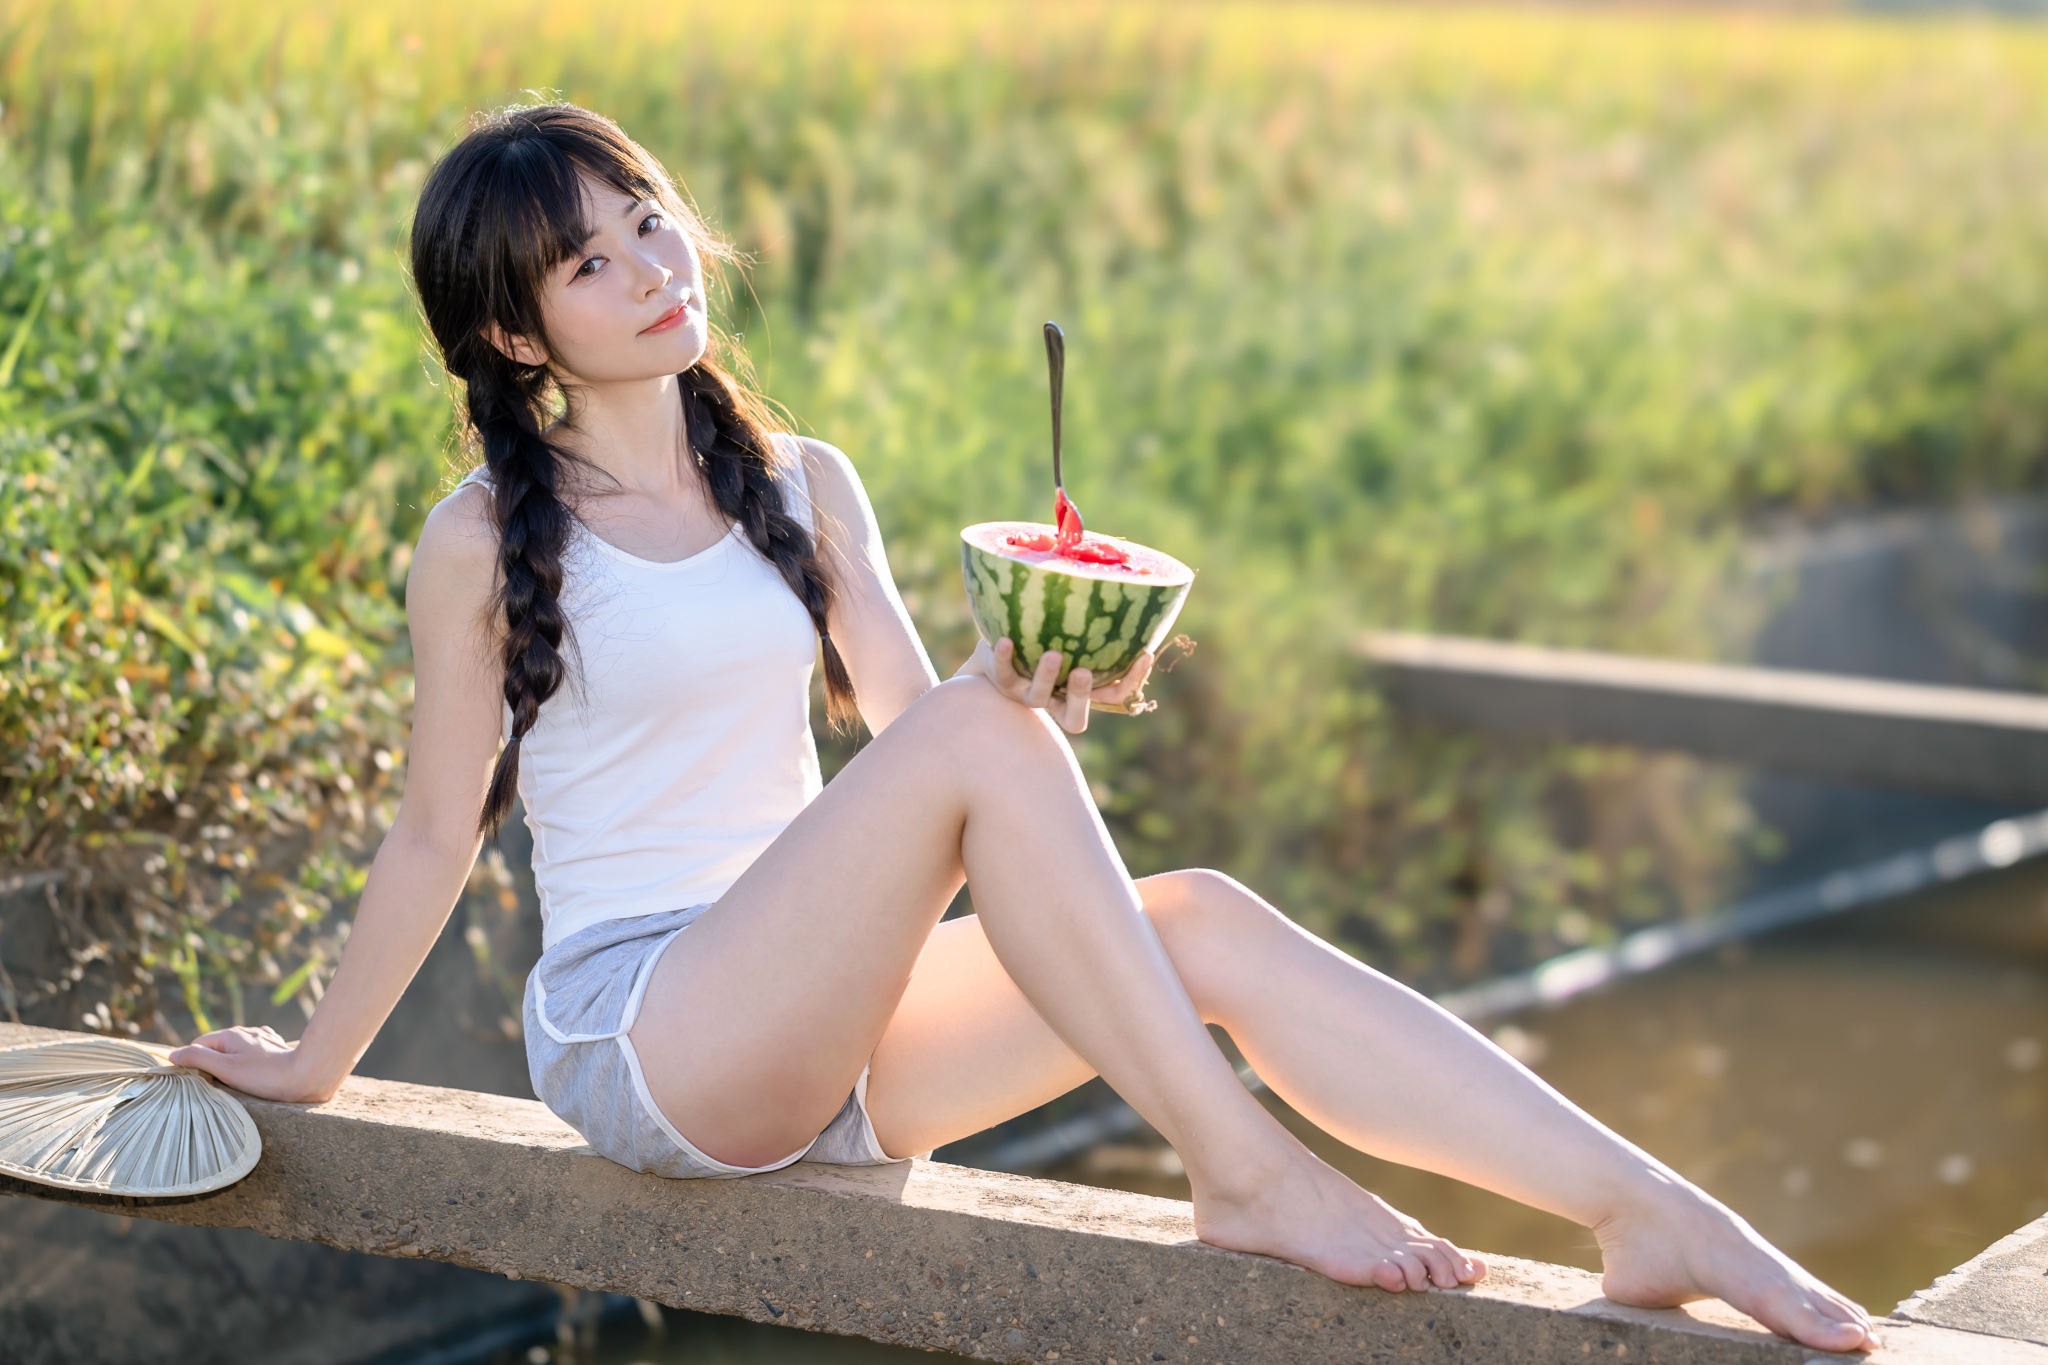 Three Portraits Studio Women Asian Dark Hair Twintails Braids Legs Barefoot Sunlight Watermelons Fru 2048x1365